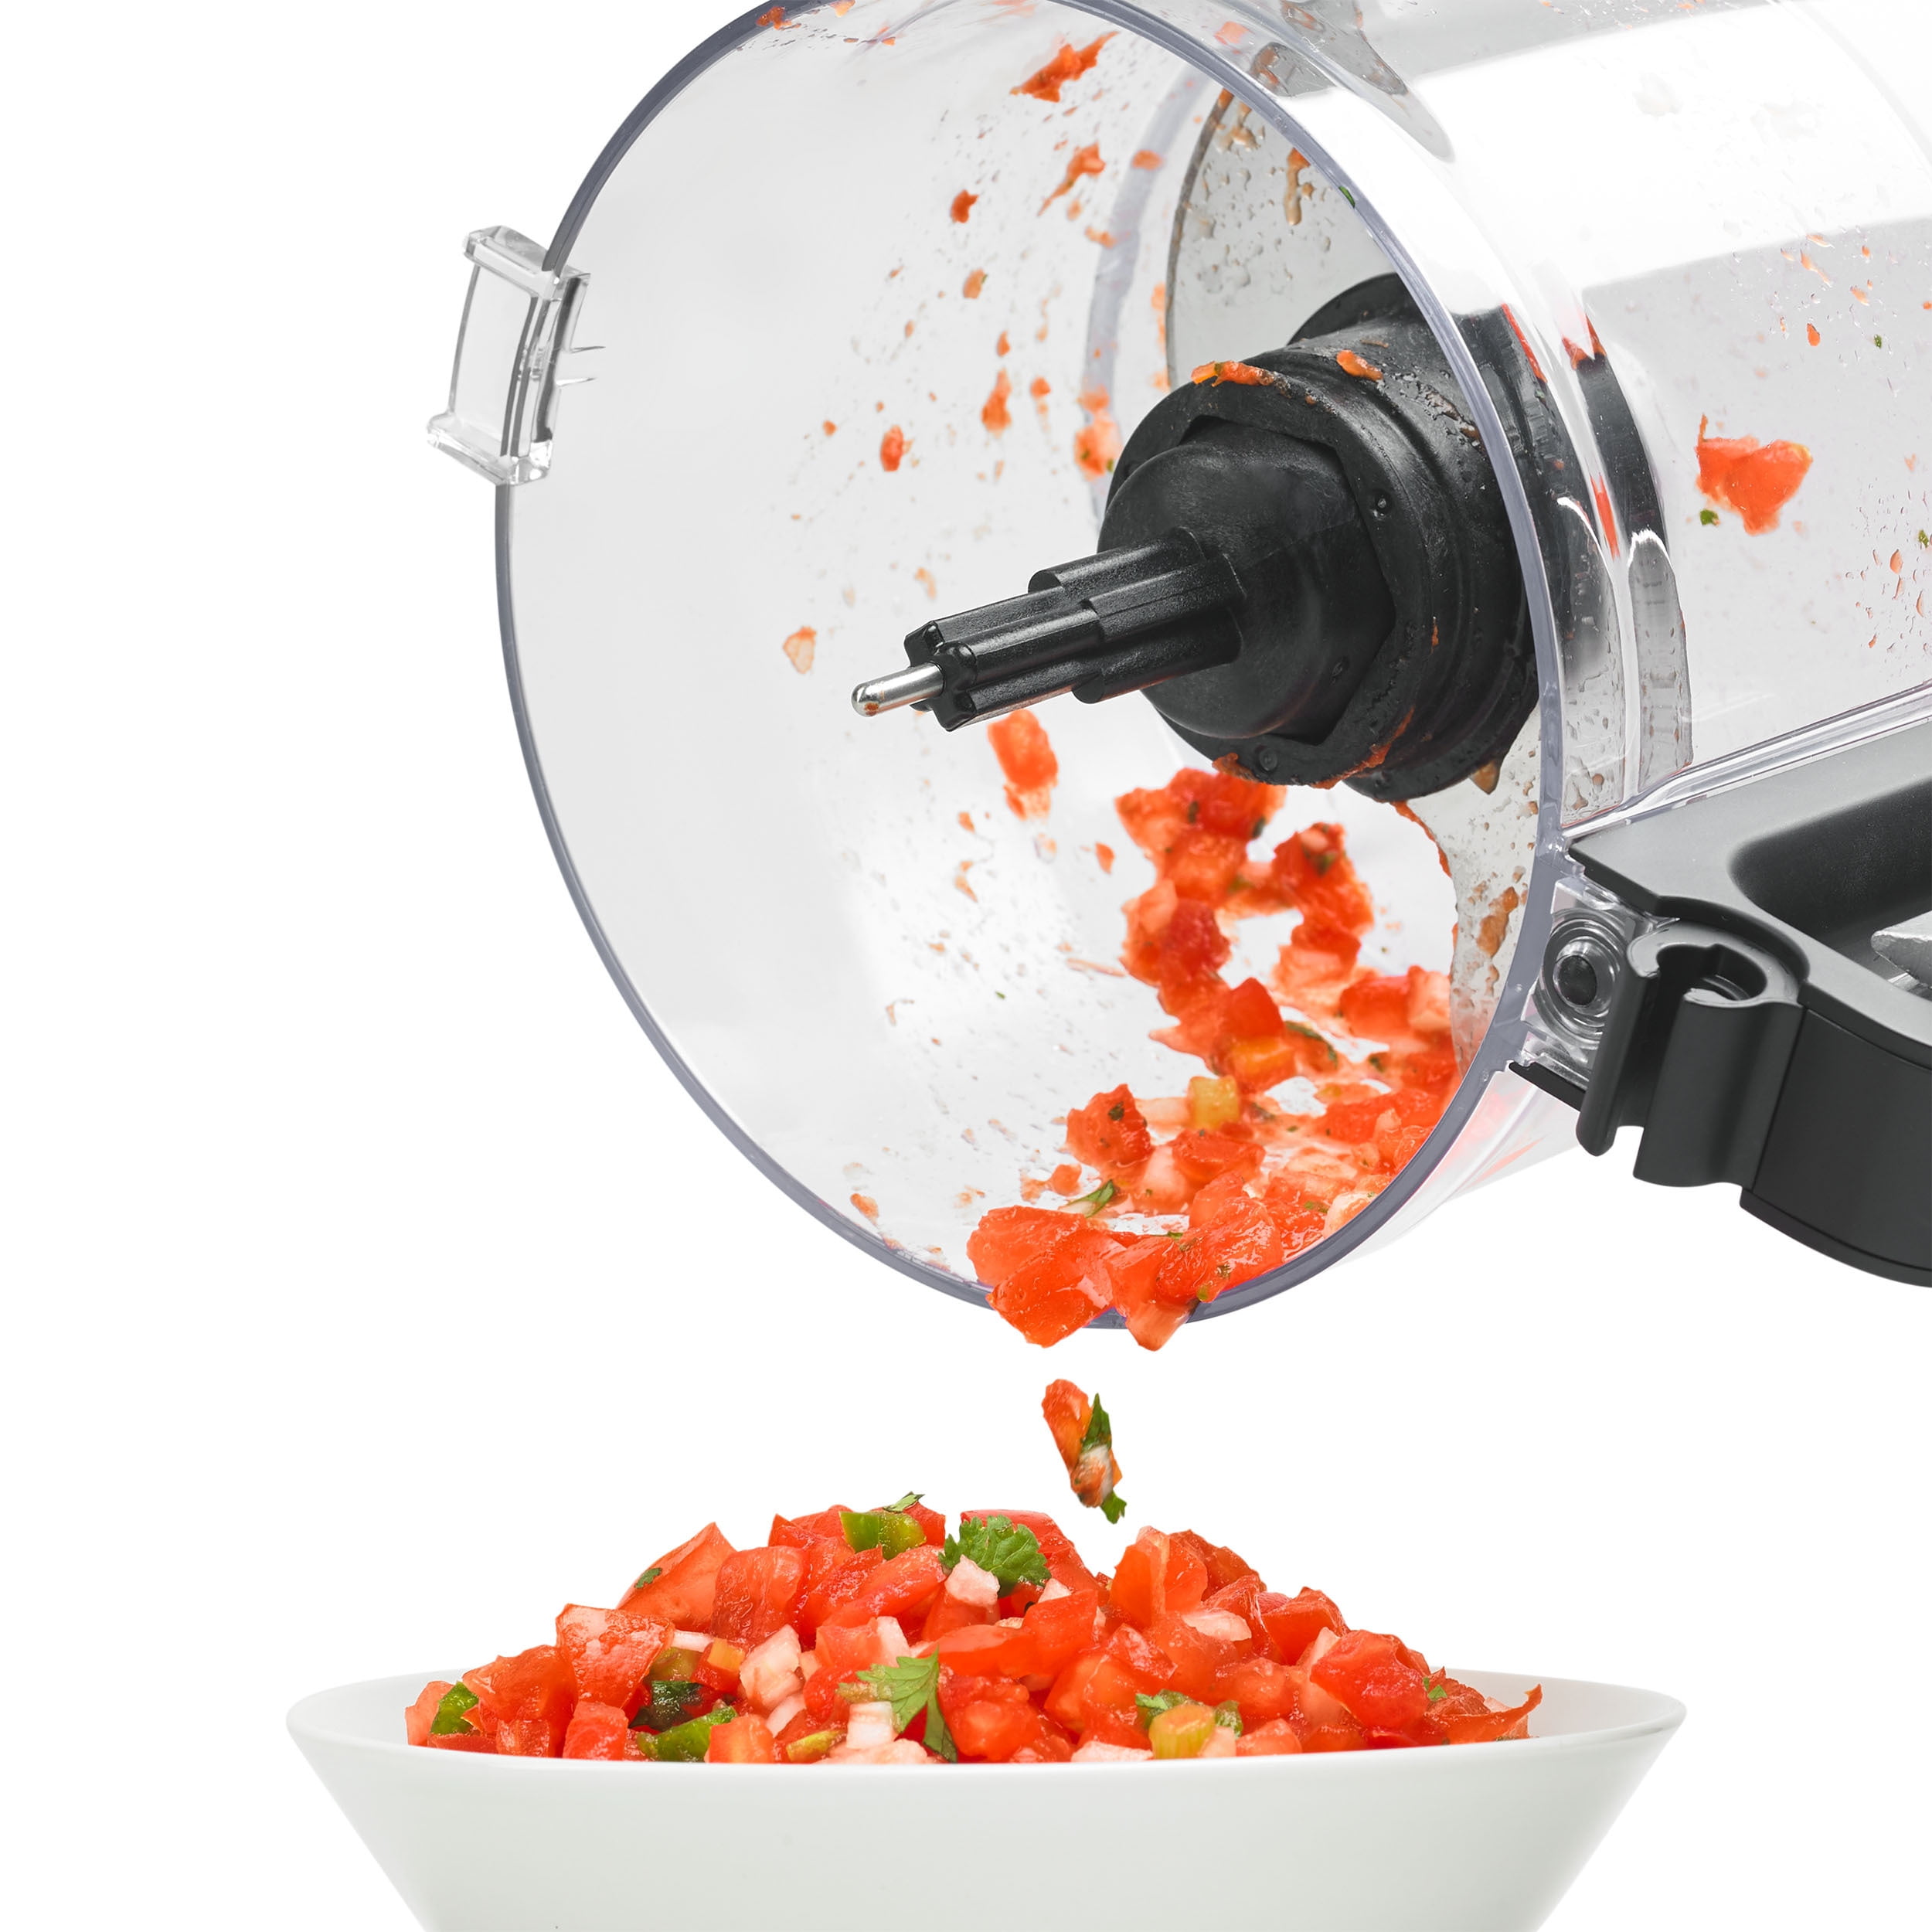 KitchenAid 5 Cup Food Processor Review 